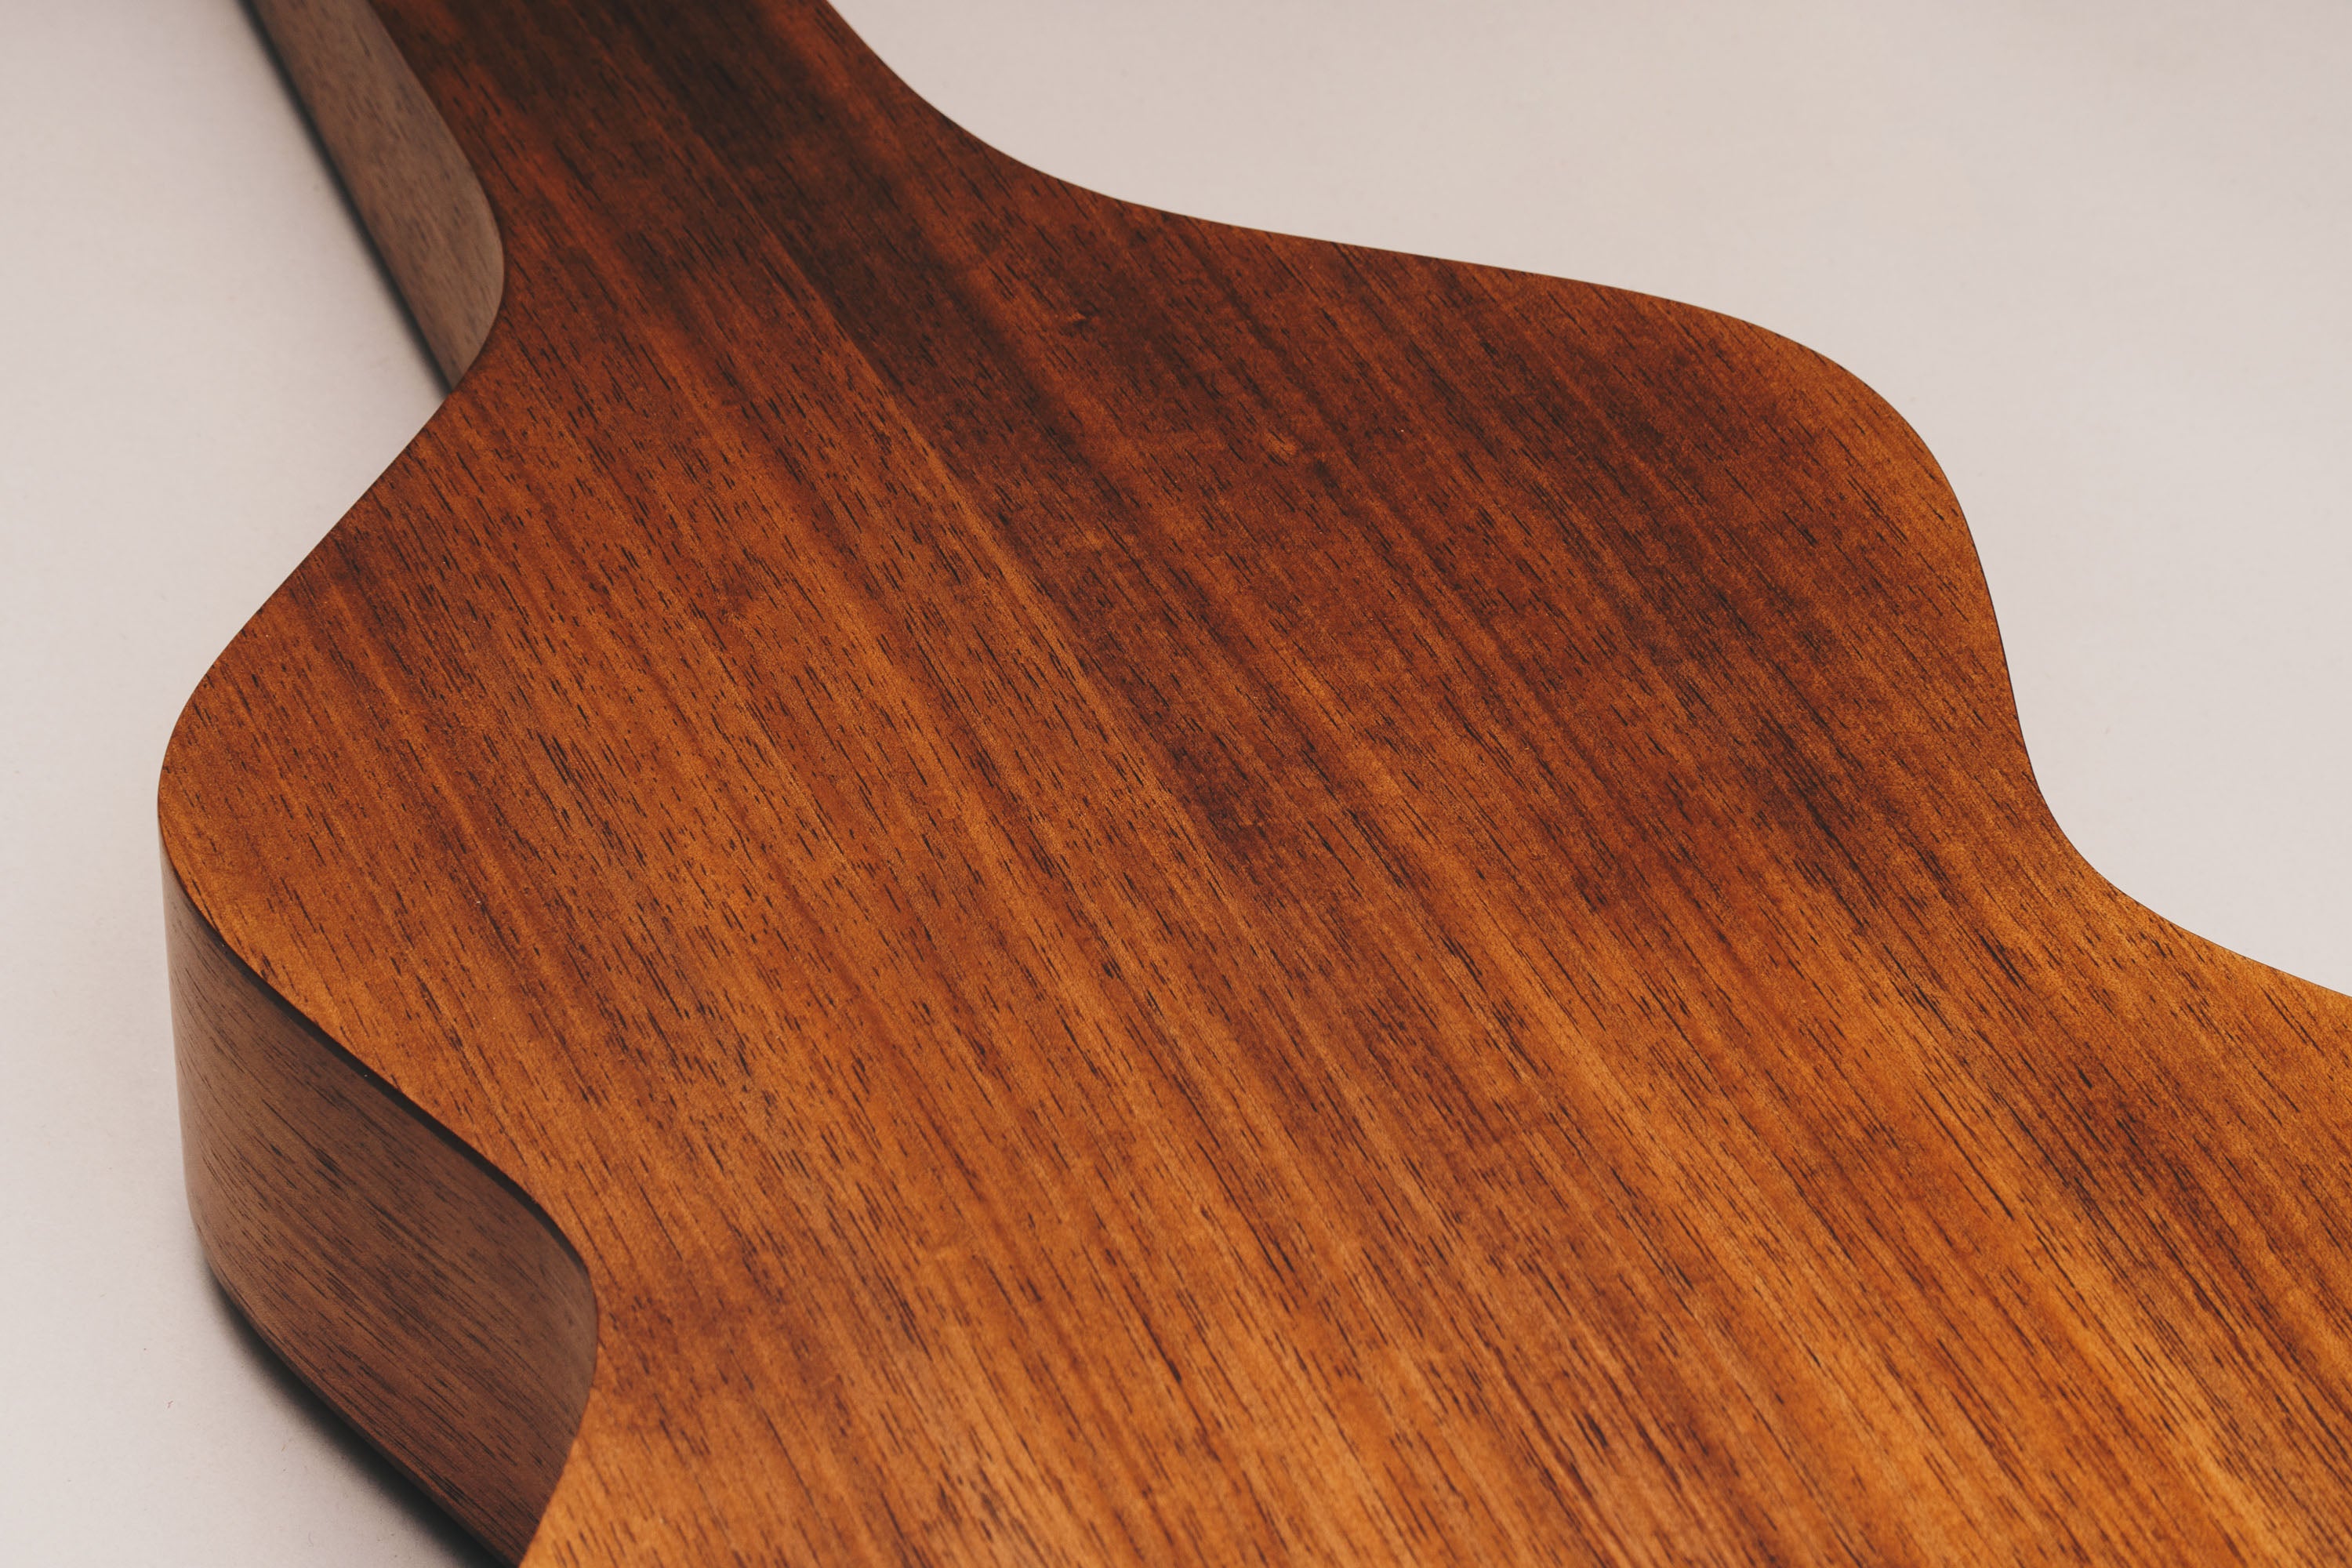 Style 1 Weissenborn Guitar Weissenborn Acoustic Lap Steel Slide Guitar by master luthier Richard Wilson. Handcrafted in Australia. Serial no. RW2308-396.